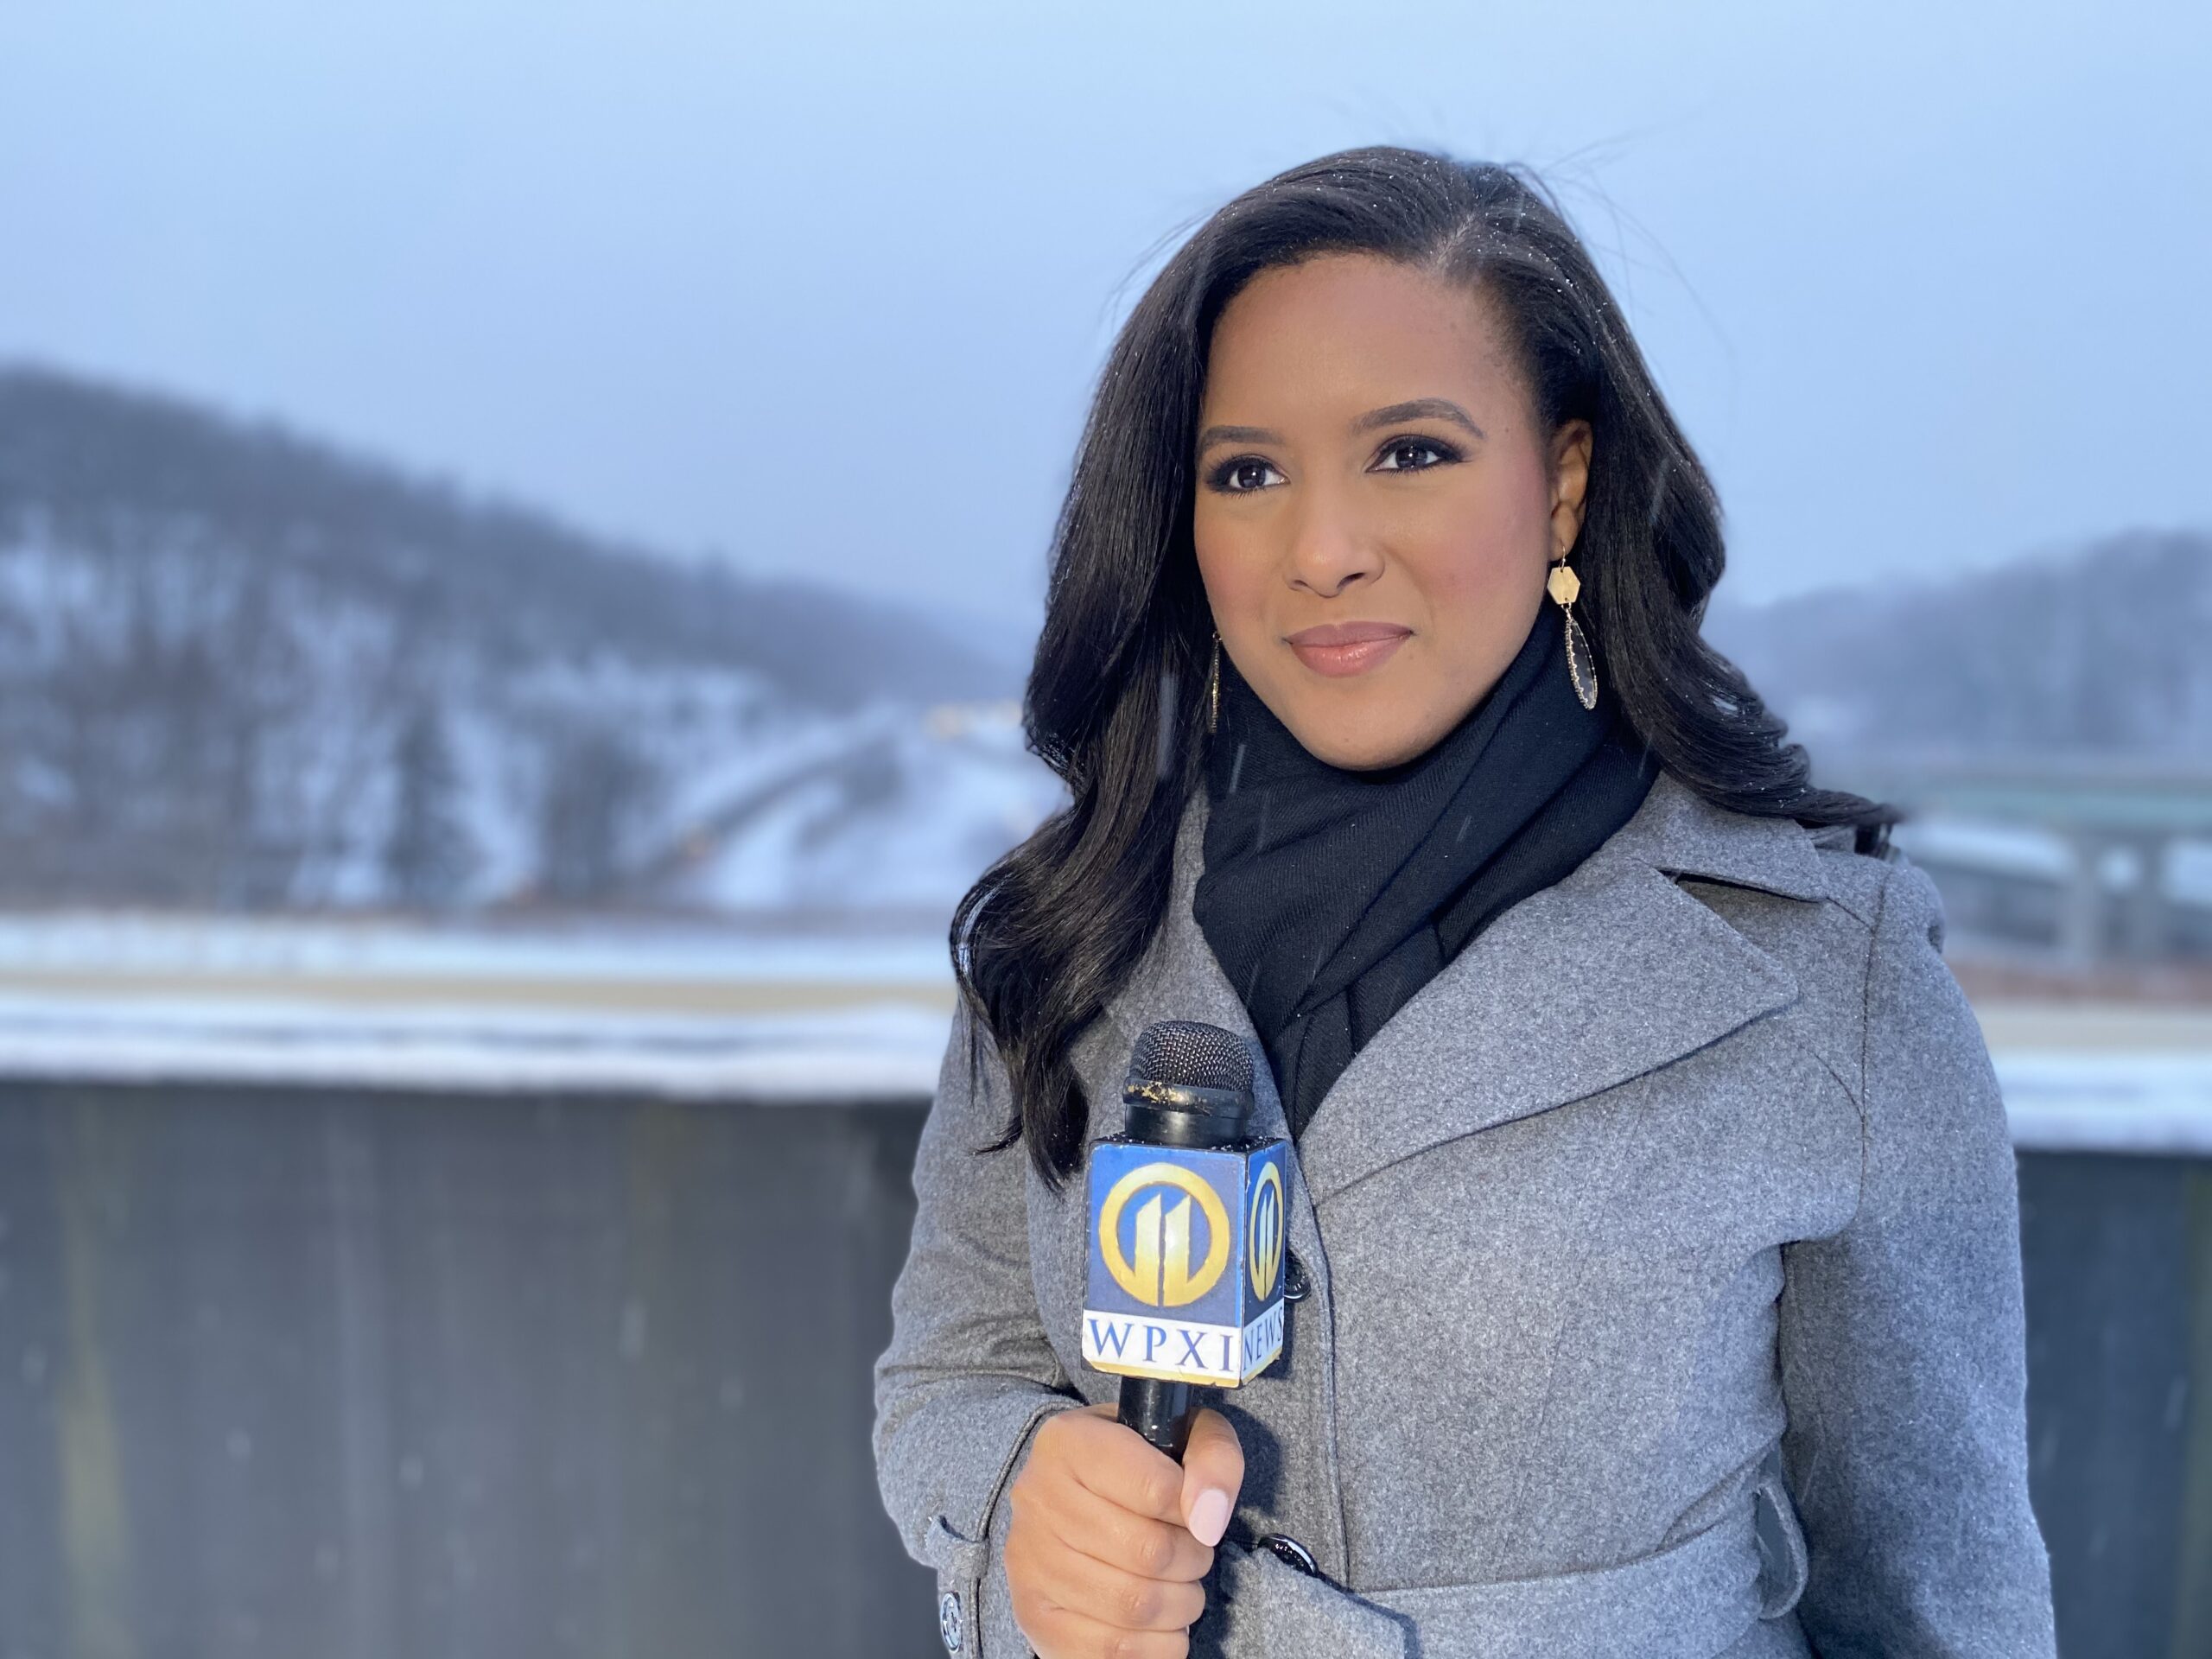 Jessica Faith, Pittsburgh's first Black woman TV meteorologist